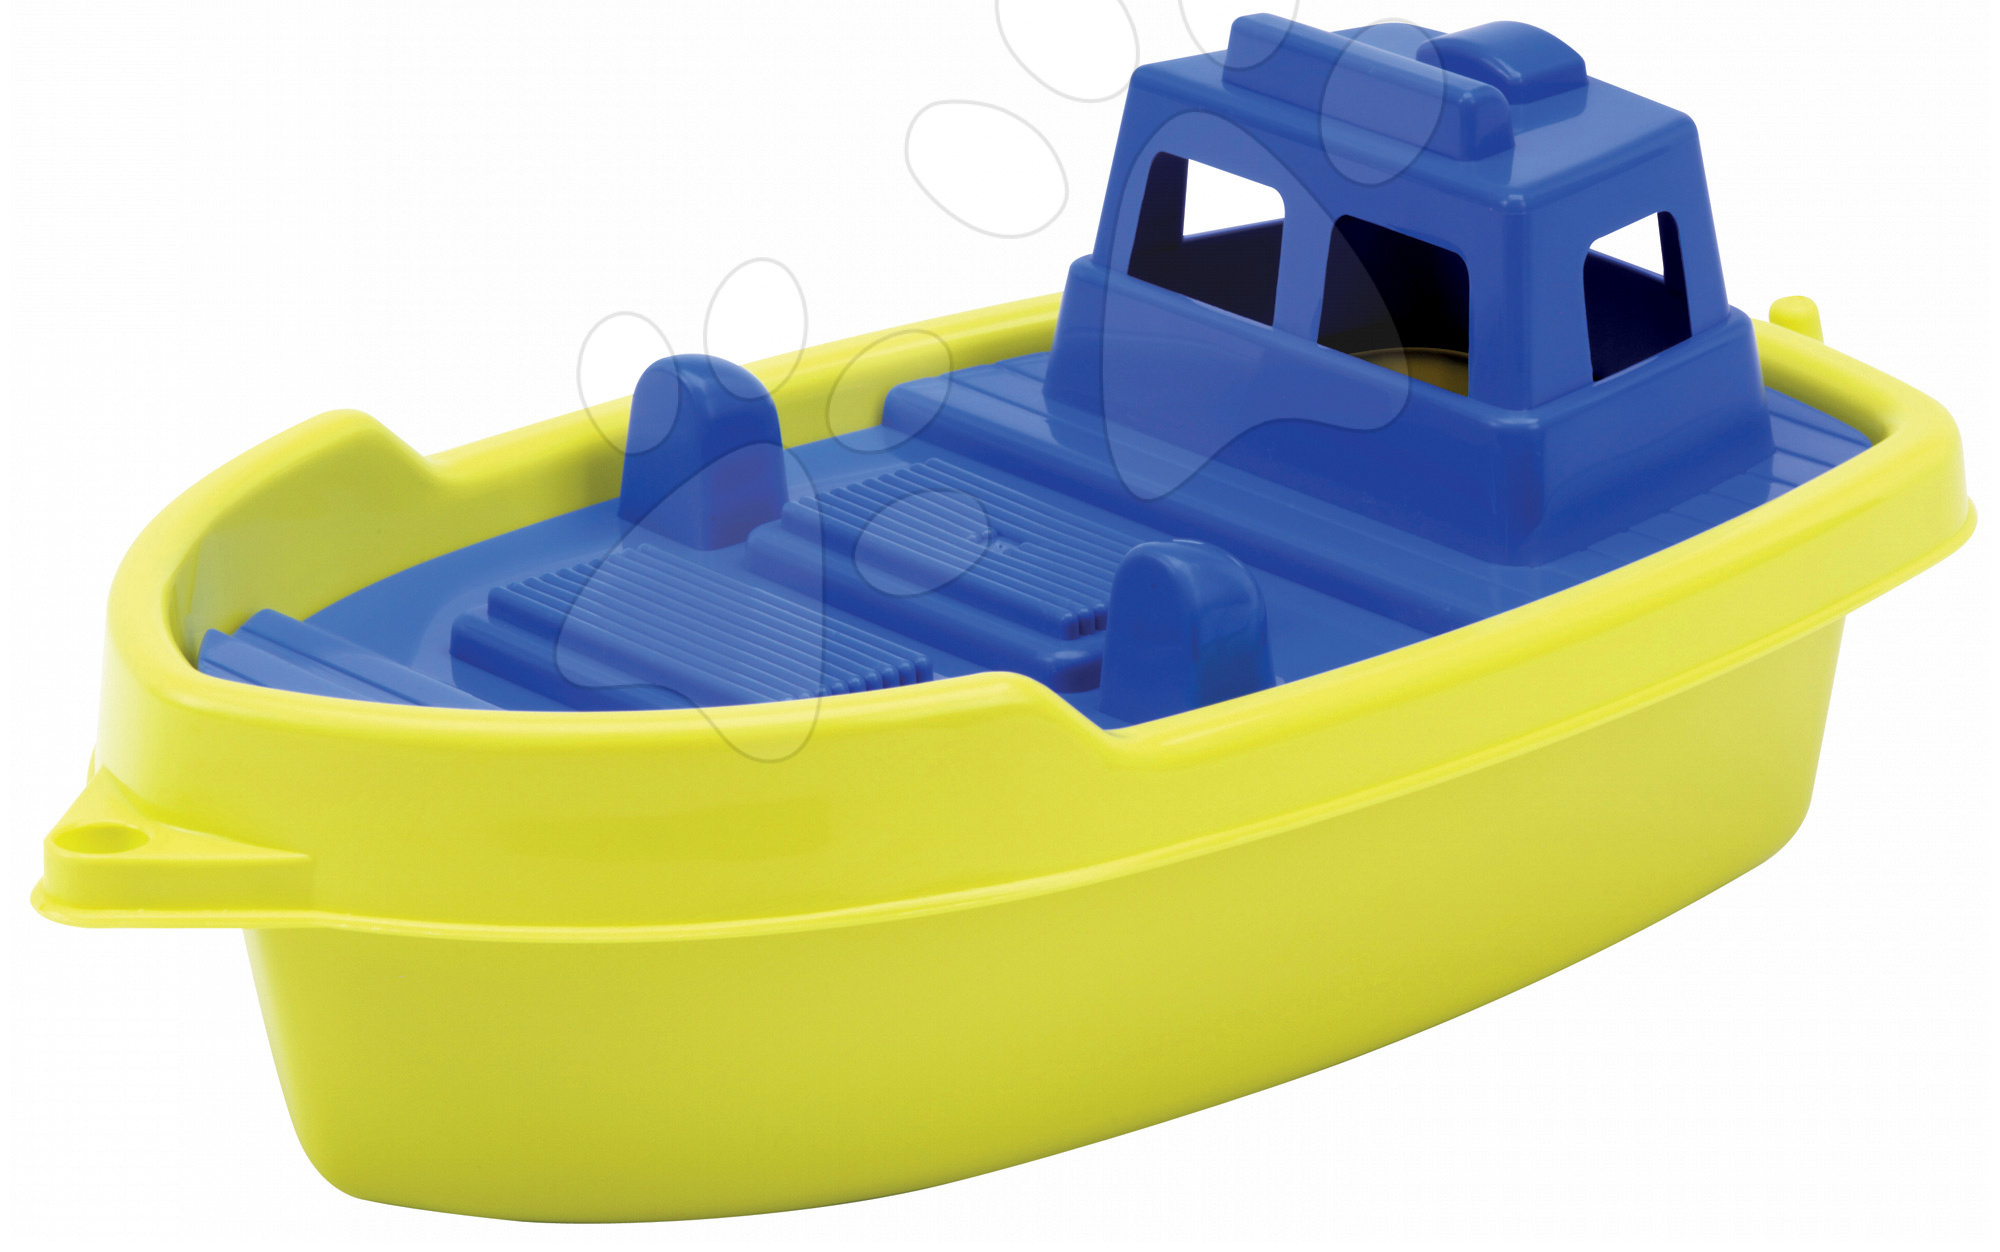 Écoiffier loďka M16210-2 žlto-modrá